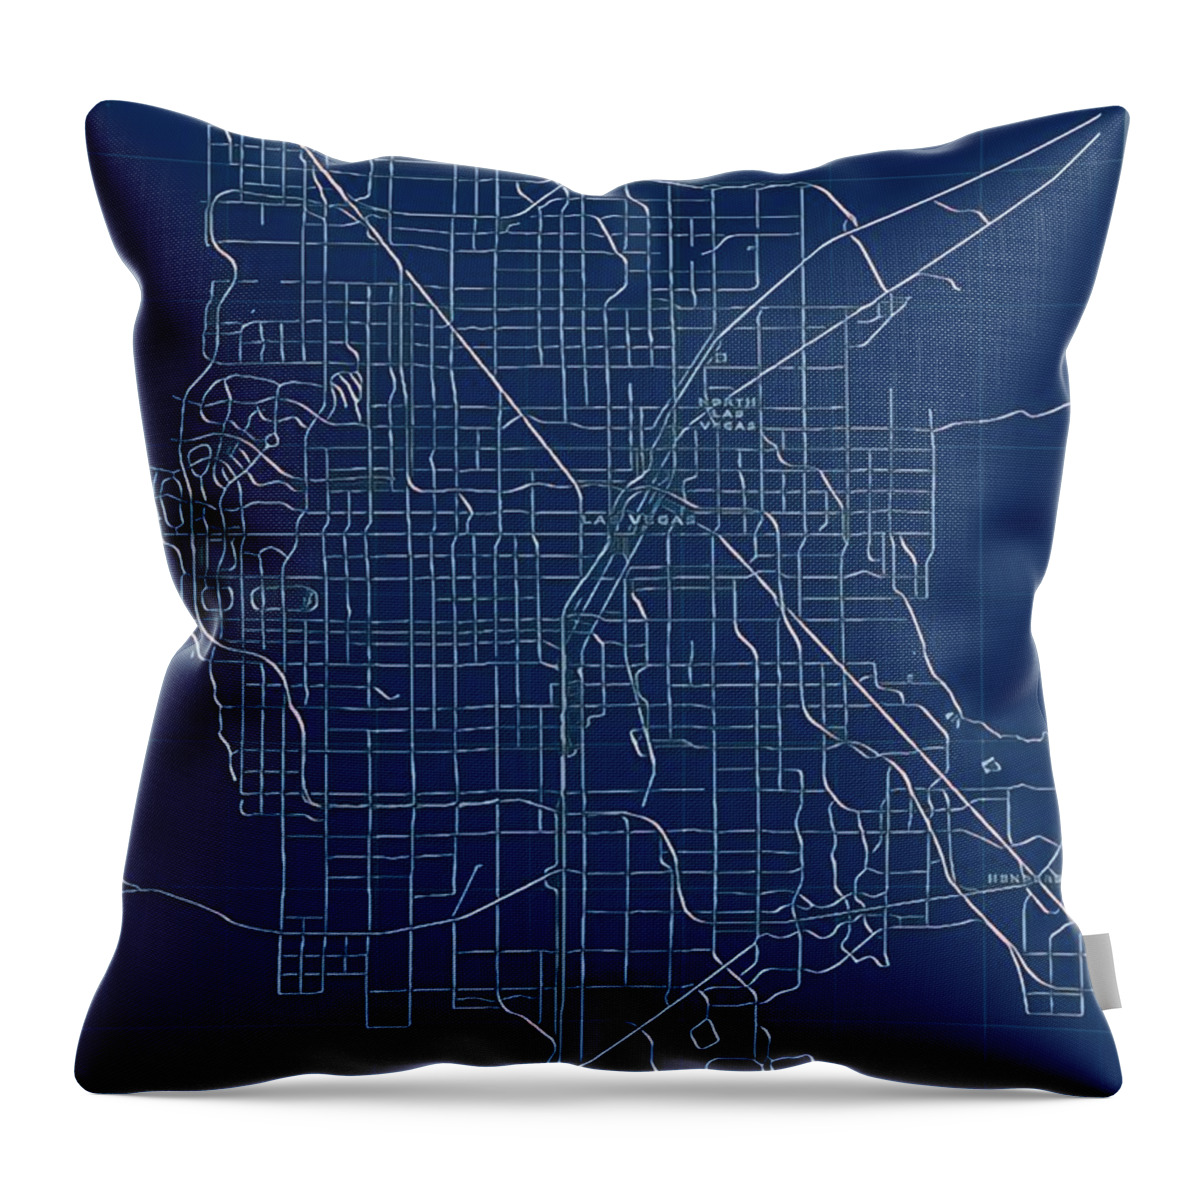 Las Vegas Throw Pillow featuring the digital art Las Vegas Blueprint City Map by HELGE Art Gallery